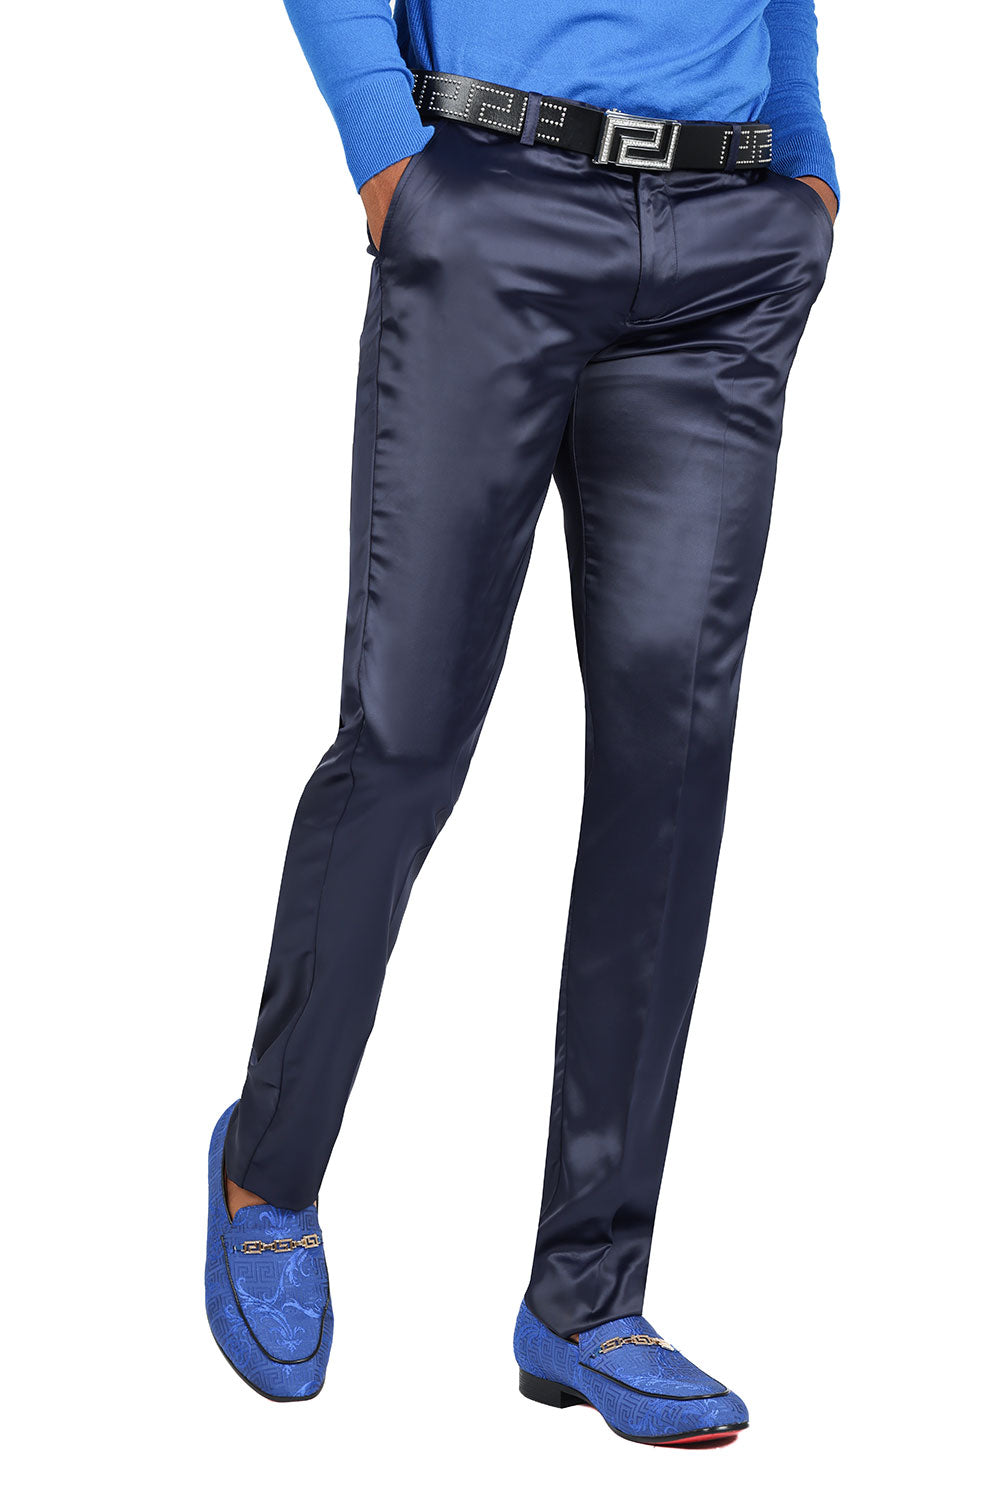 Barabas Men's Satin Solid Design Shiny Luxury Chino Pants 2CP3114 Navy